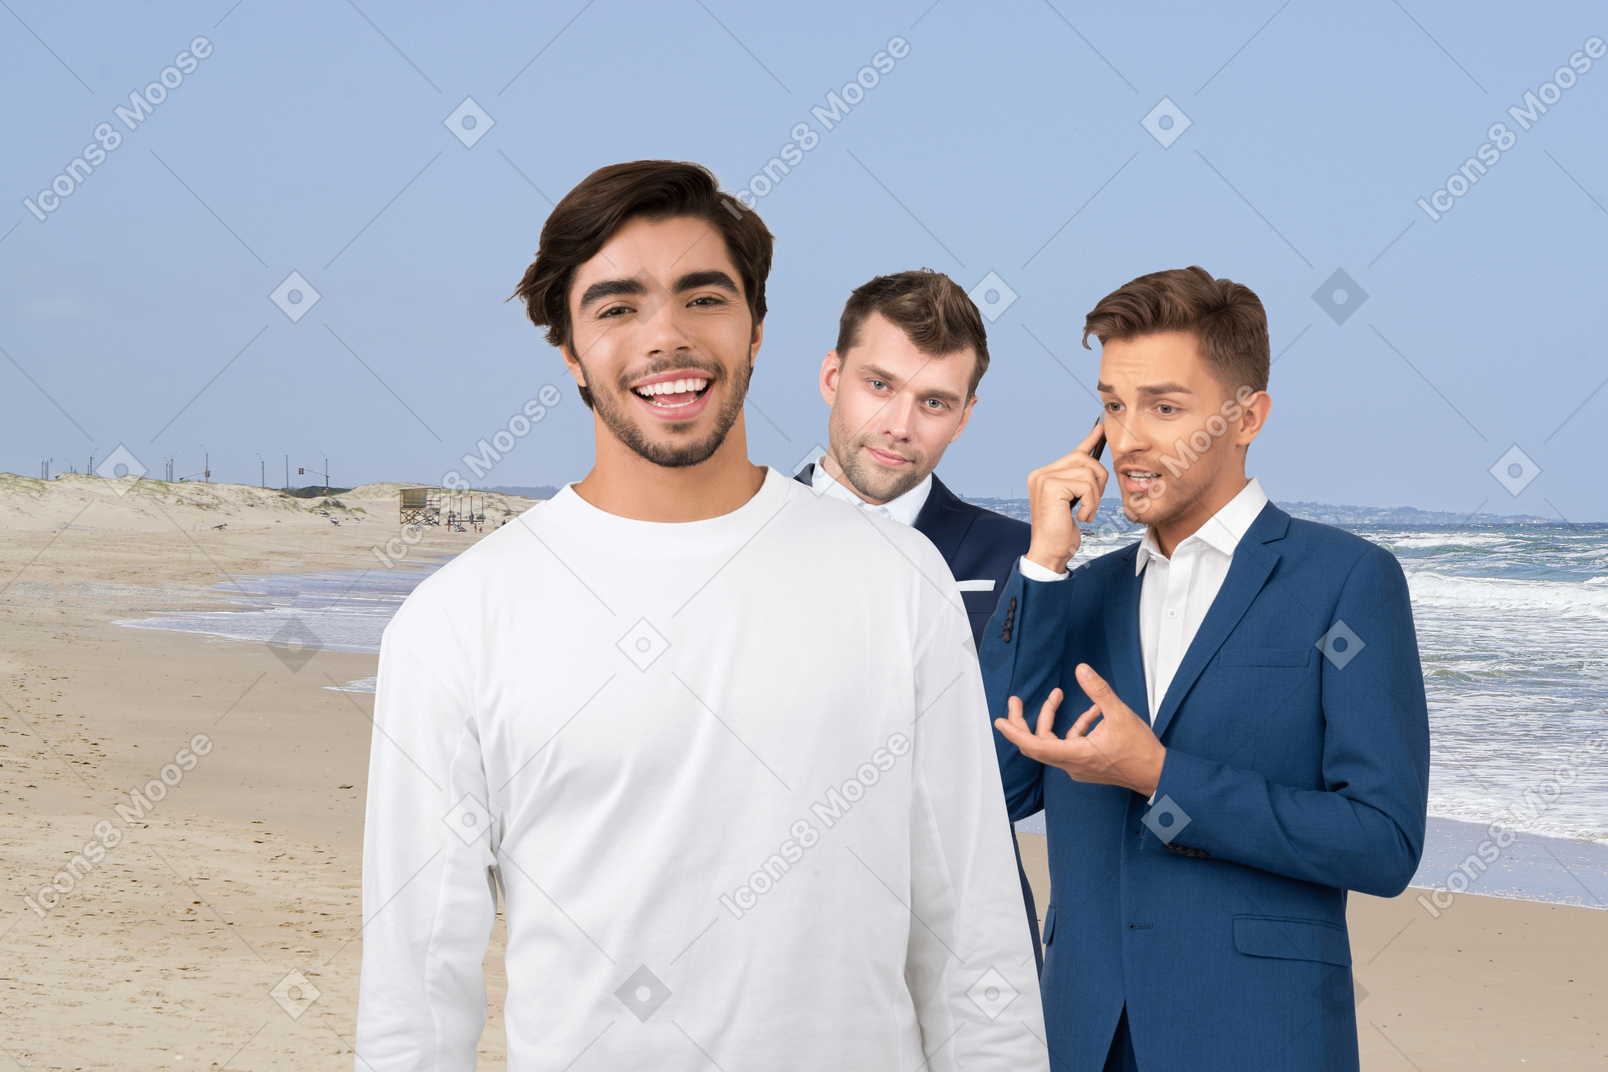 Businessman standing on the beach